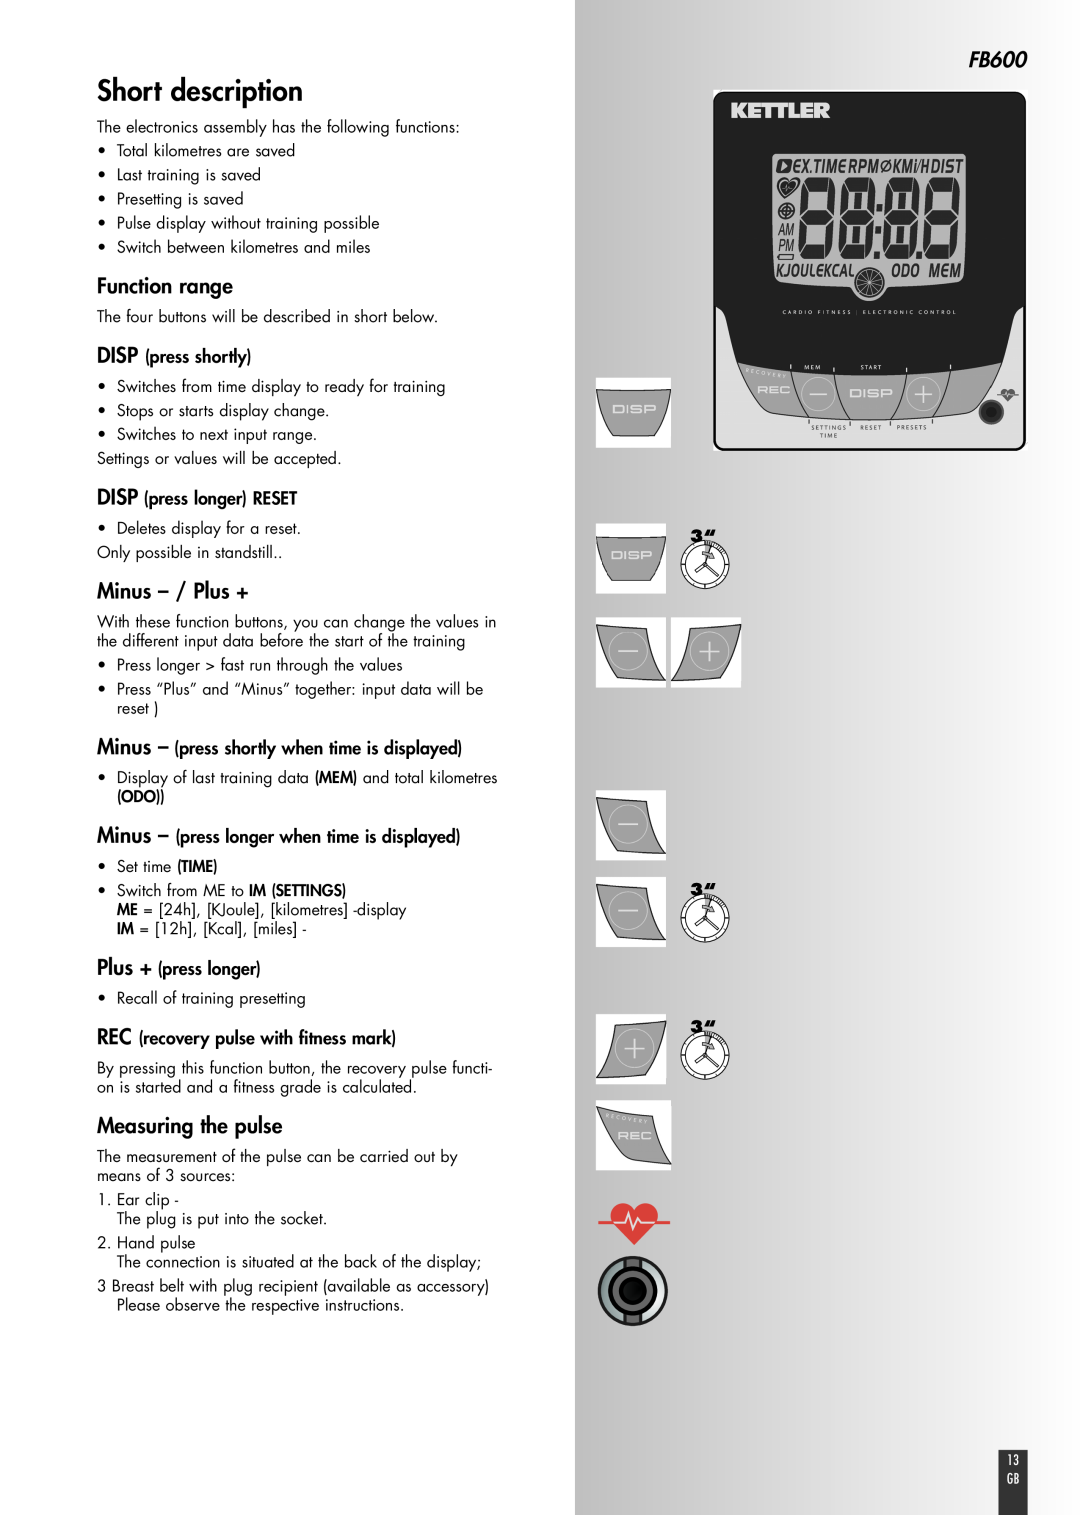 Kettler FB600 manual Short description, Function range, Minus - / Plus +, Measuring the pulse, DISP press shortly 